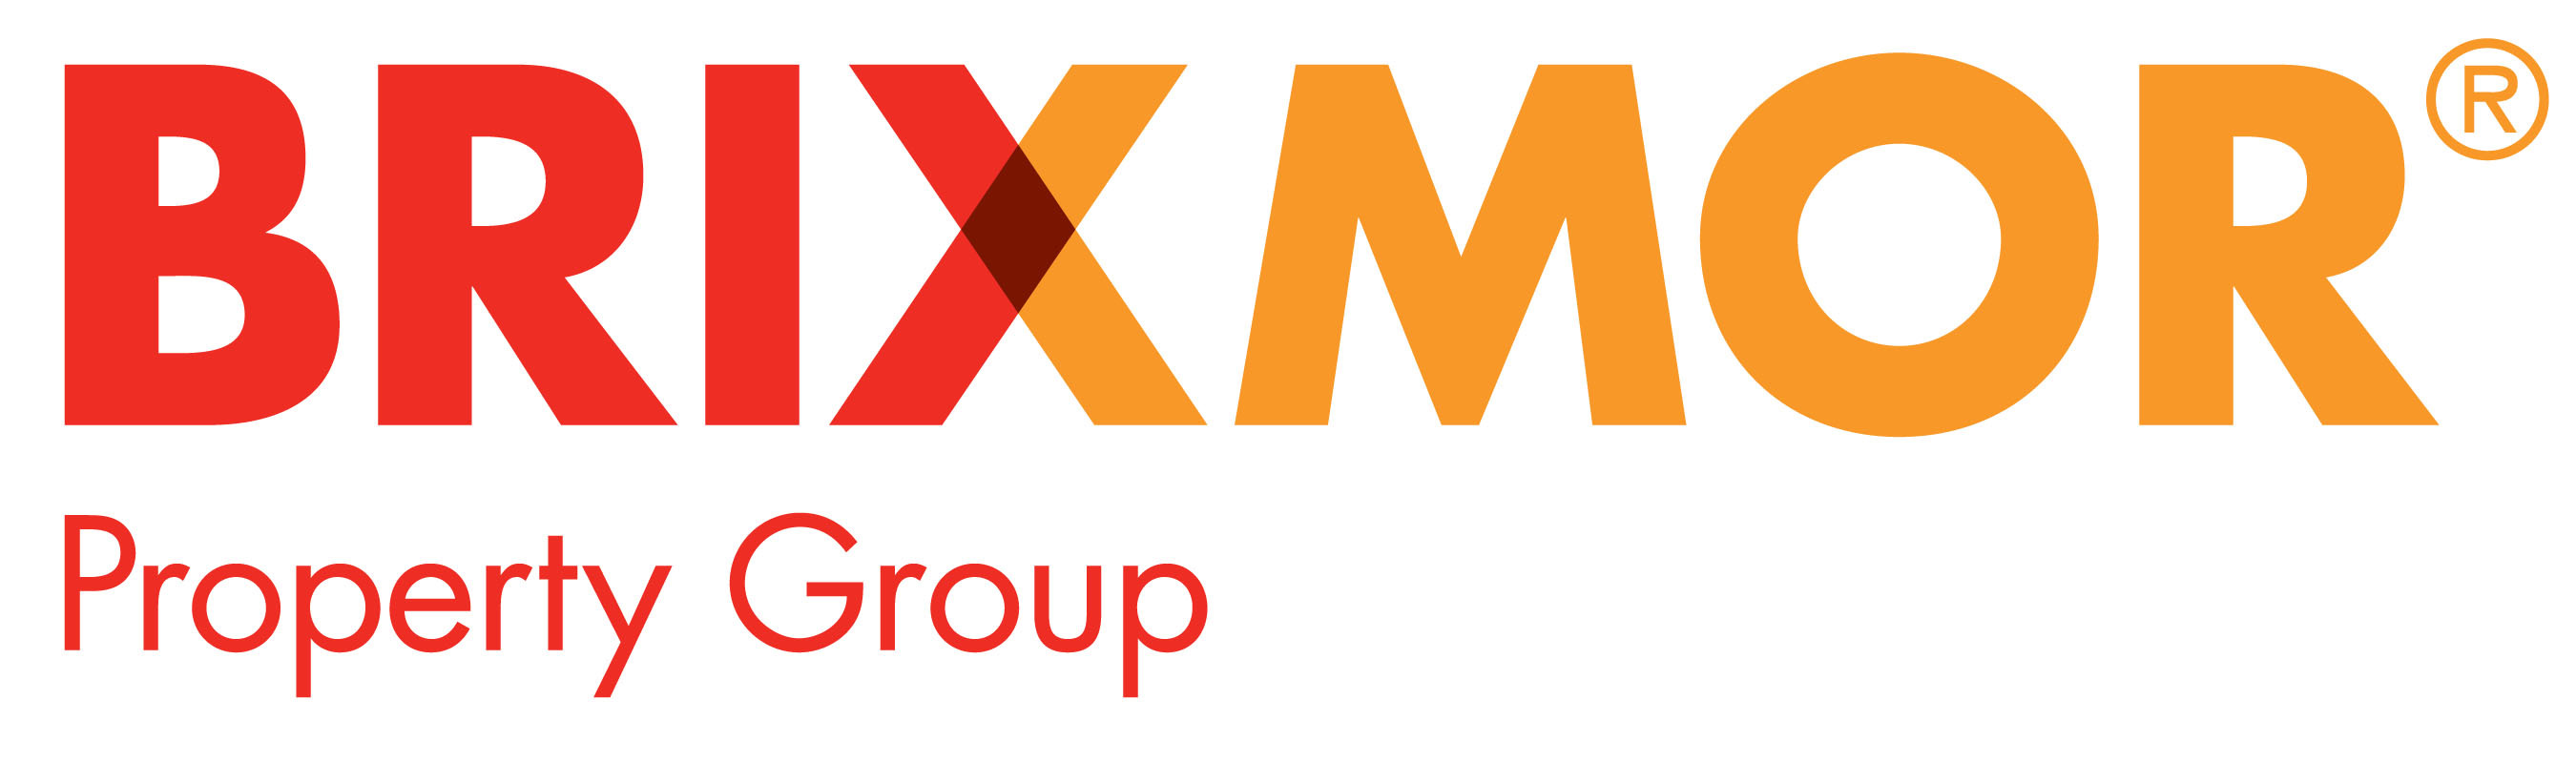 Brixmor Property Group Logo.